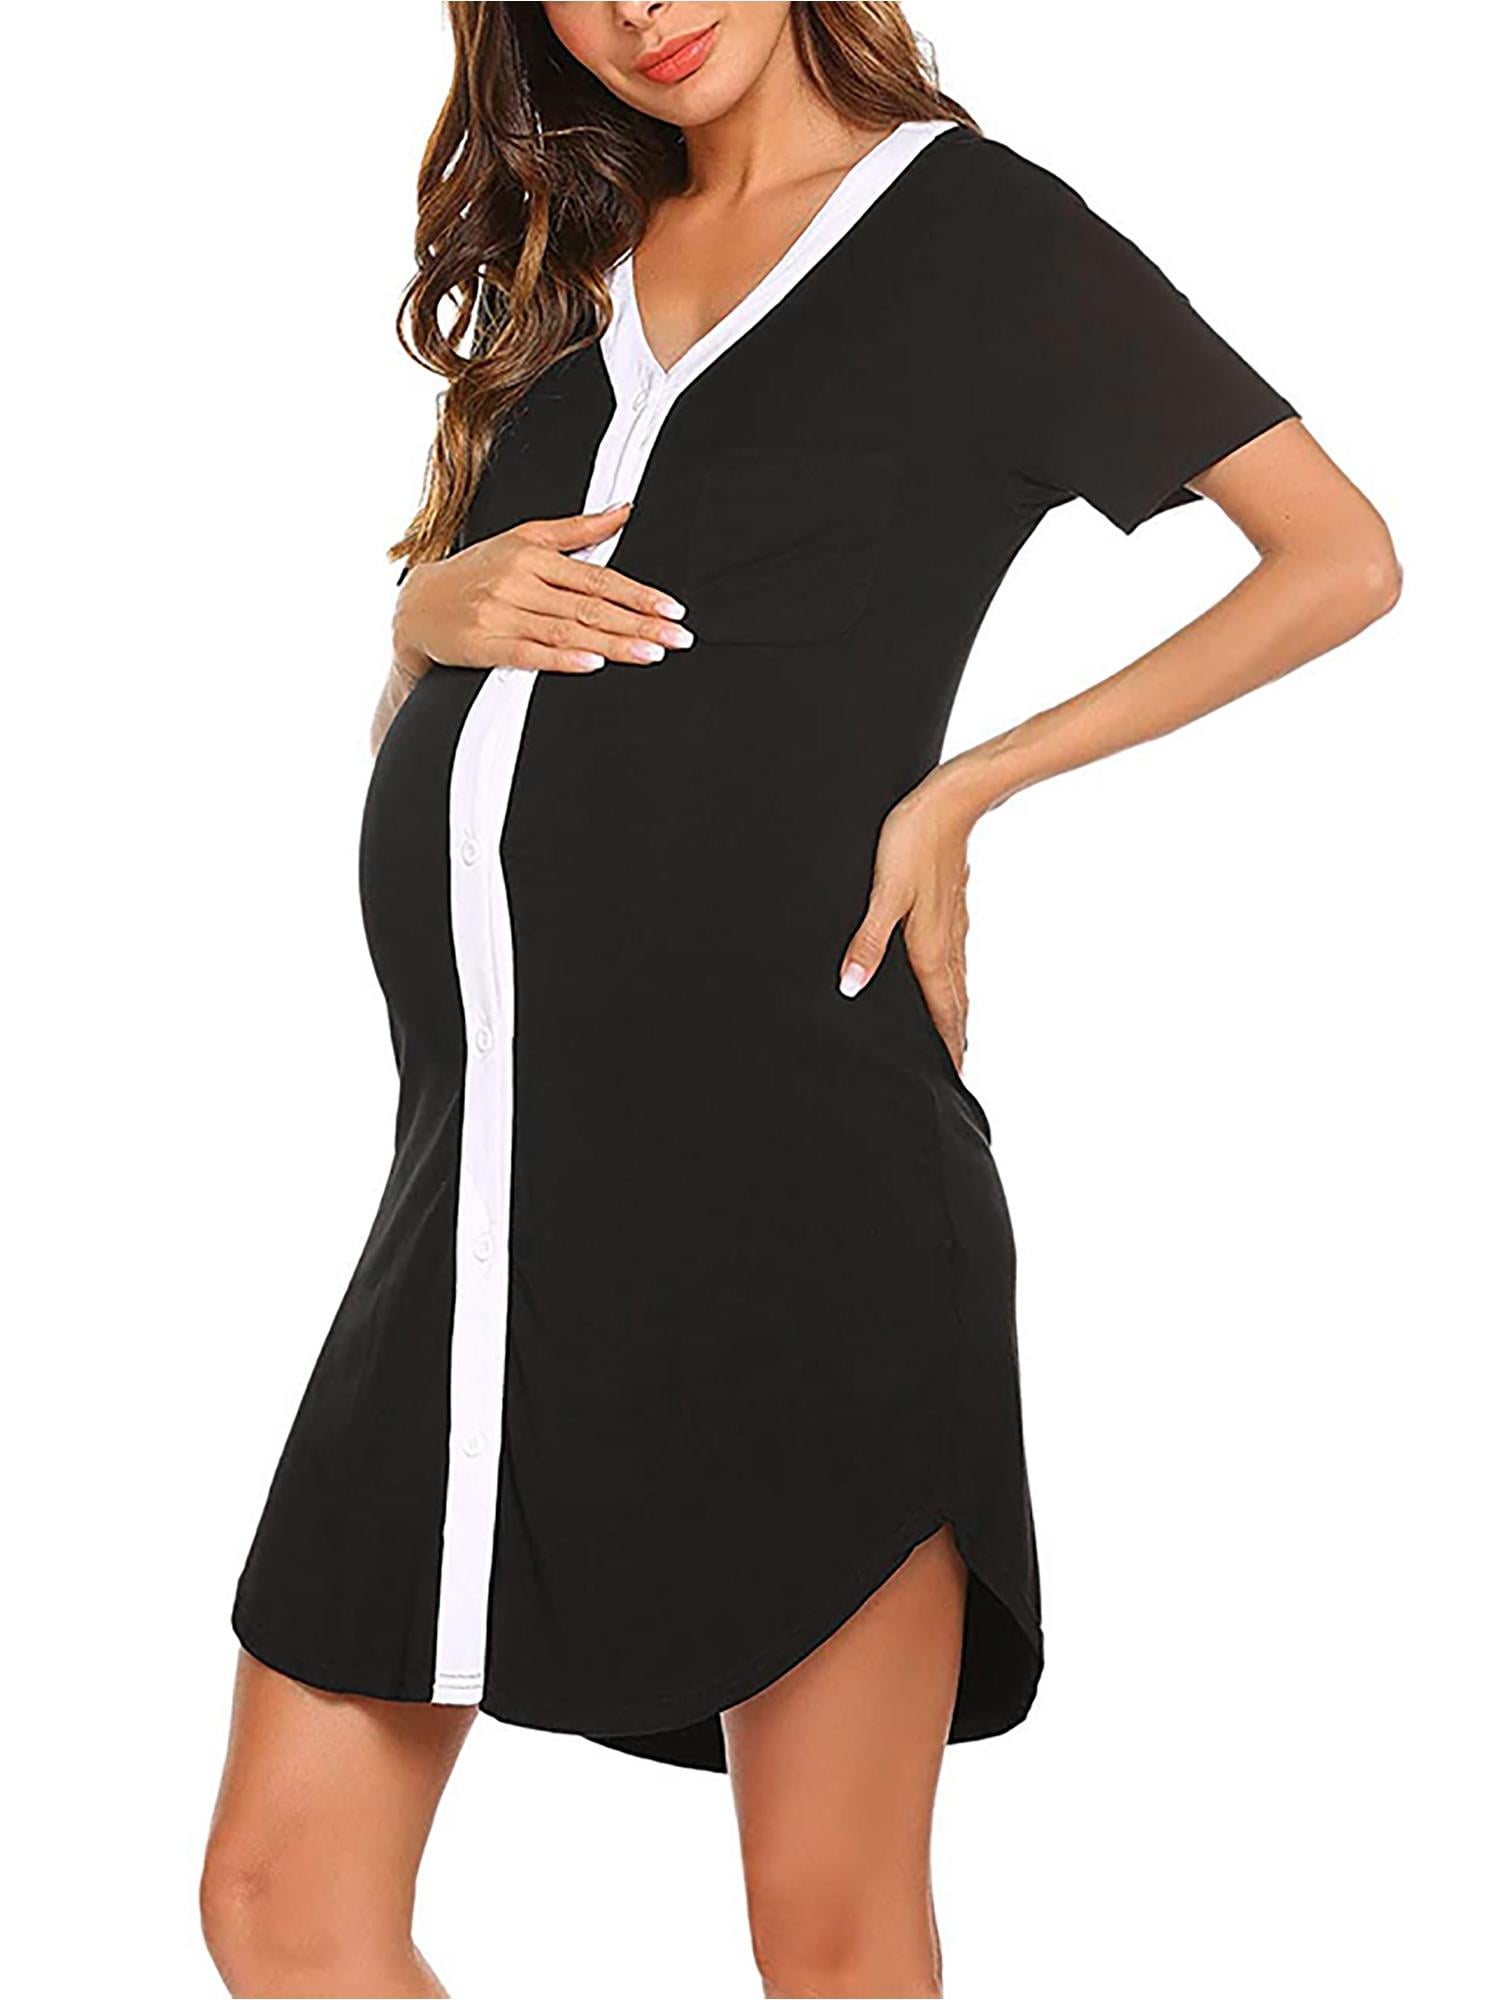 Black Maternity Nursing Brown Pajama Night Gown Breastfeeding Set Lace S M L XL 